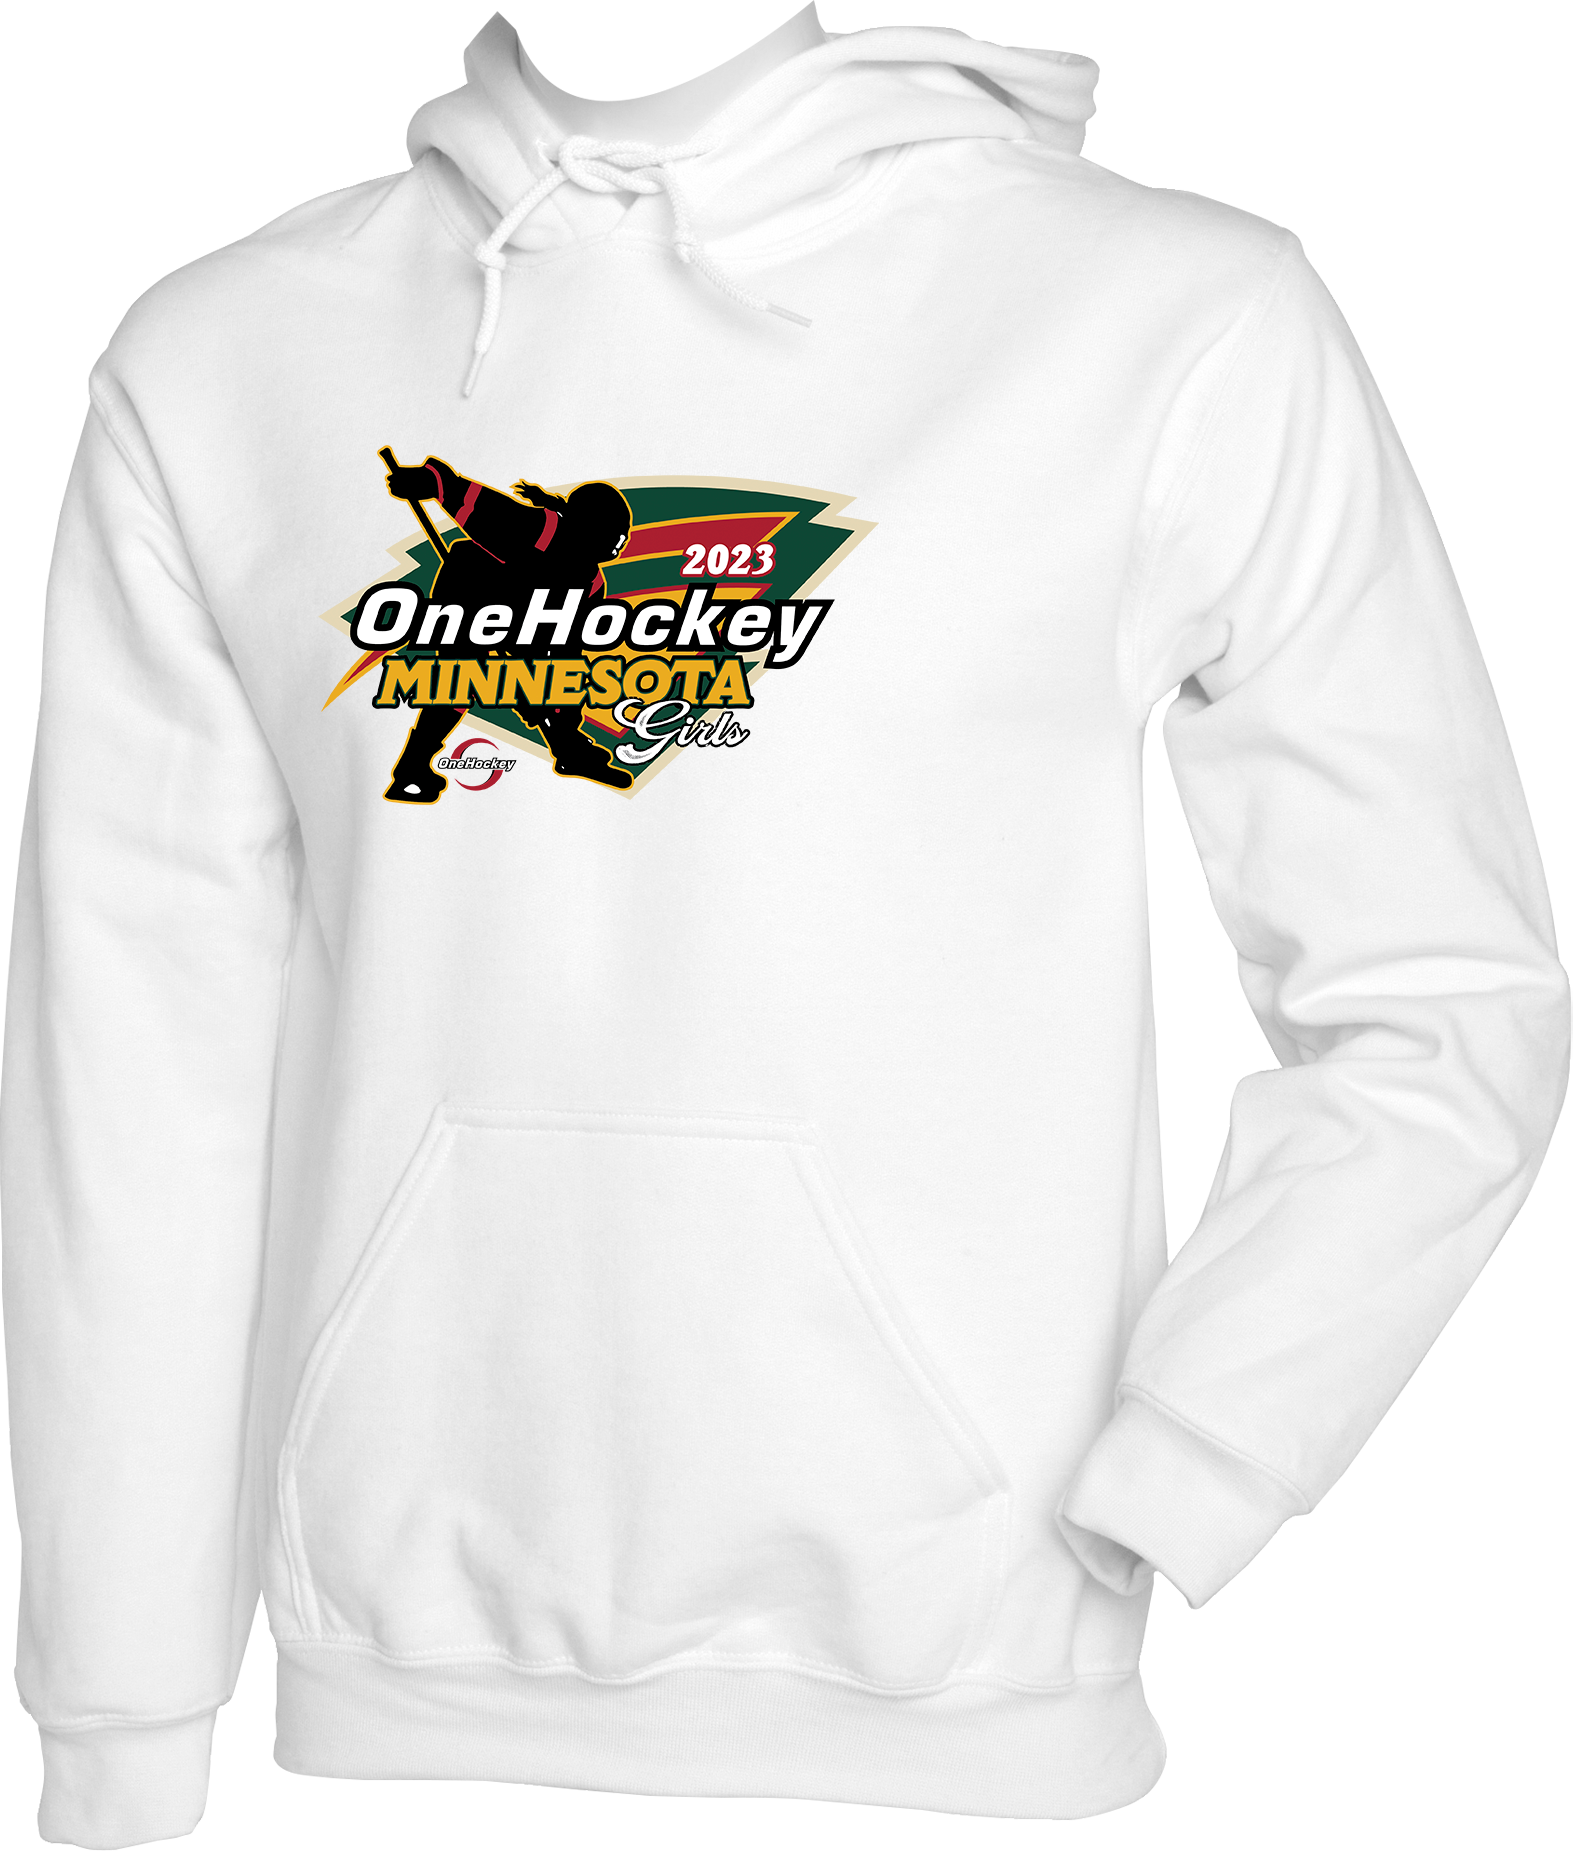 HOODIES - 2023 OneHockey Minnesota Girls